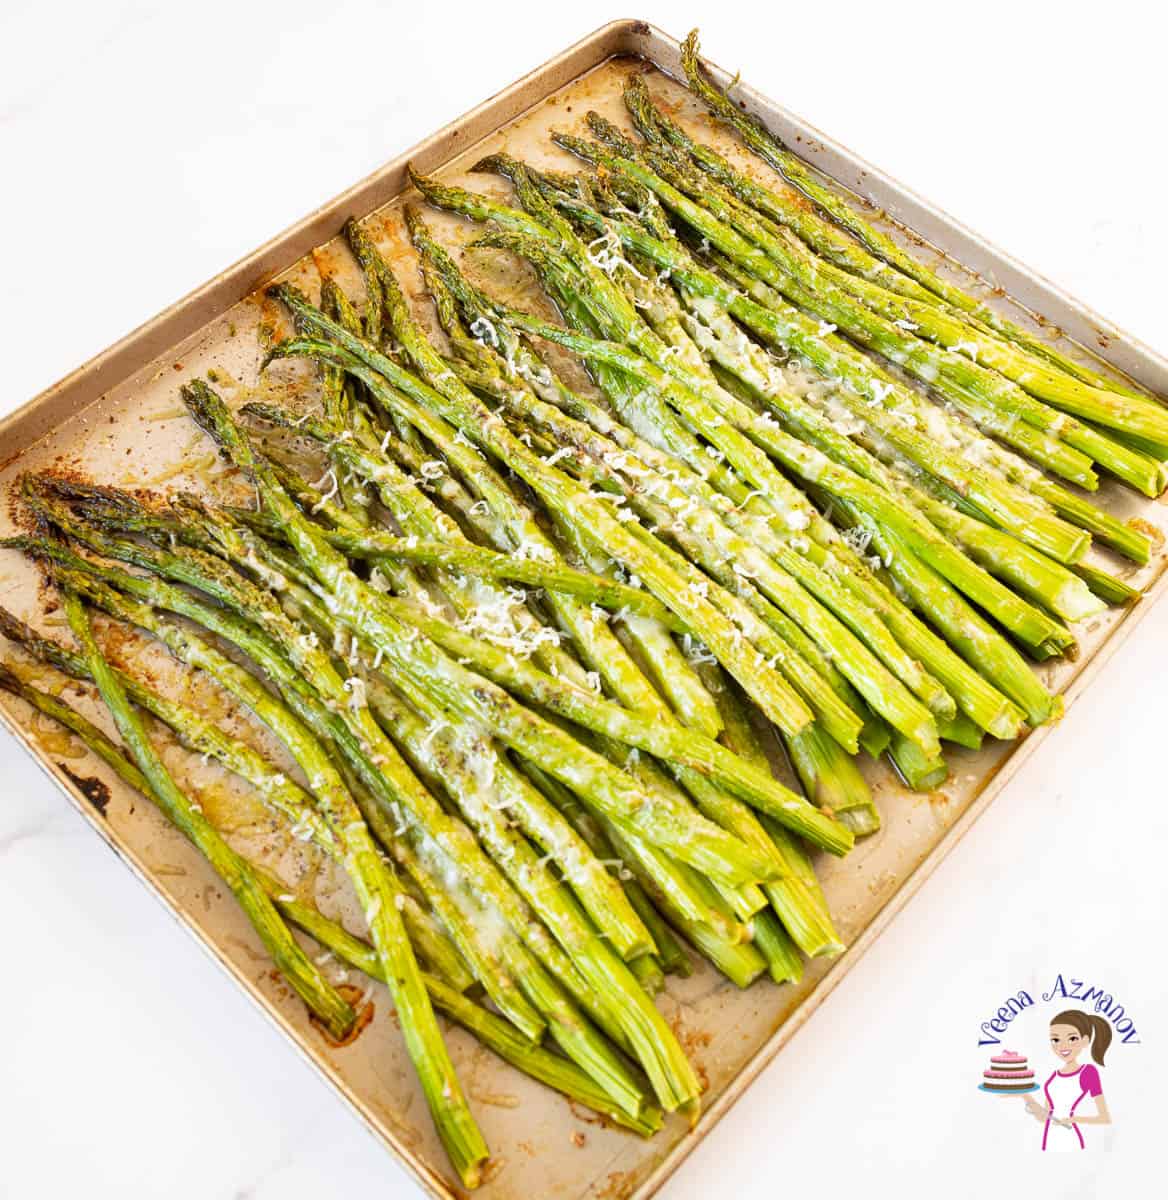 Roasted asparagus on a baking tray